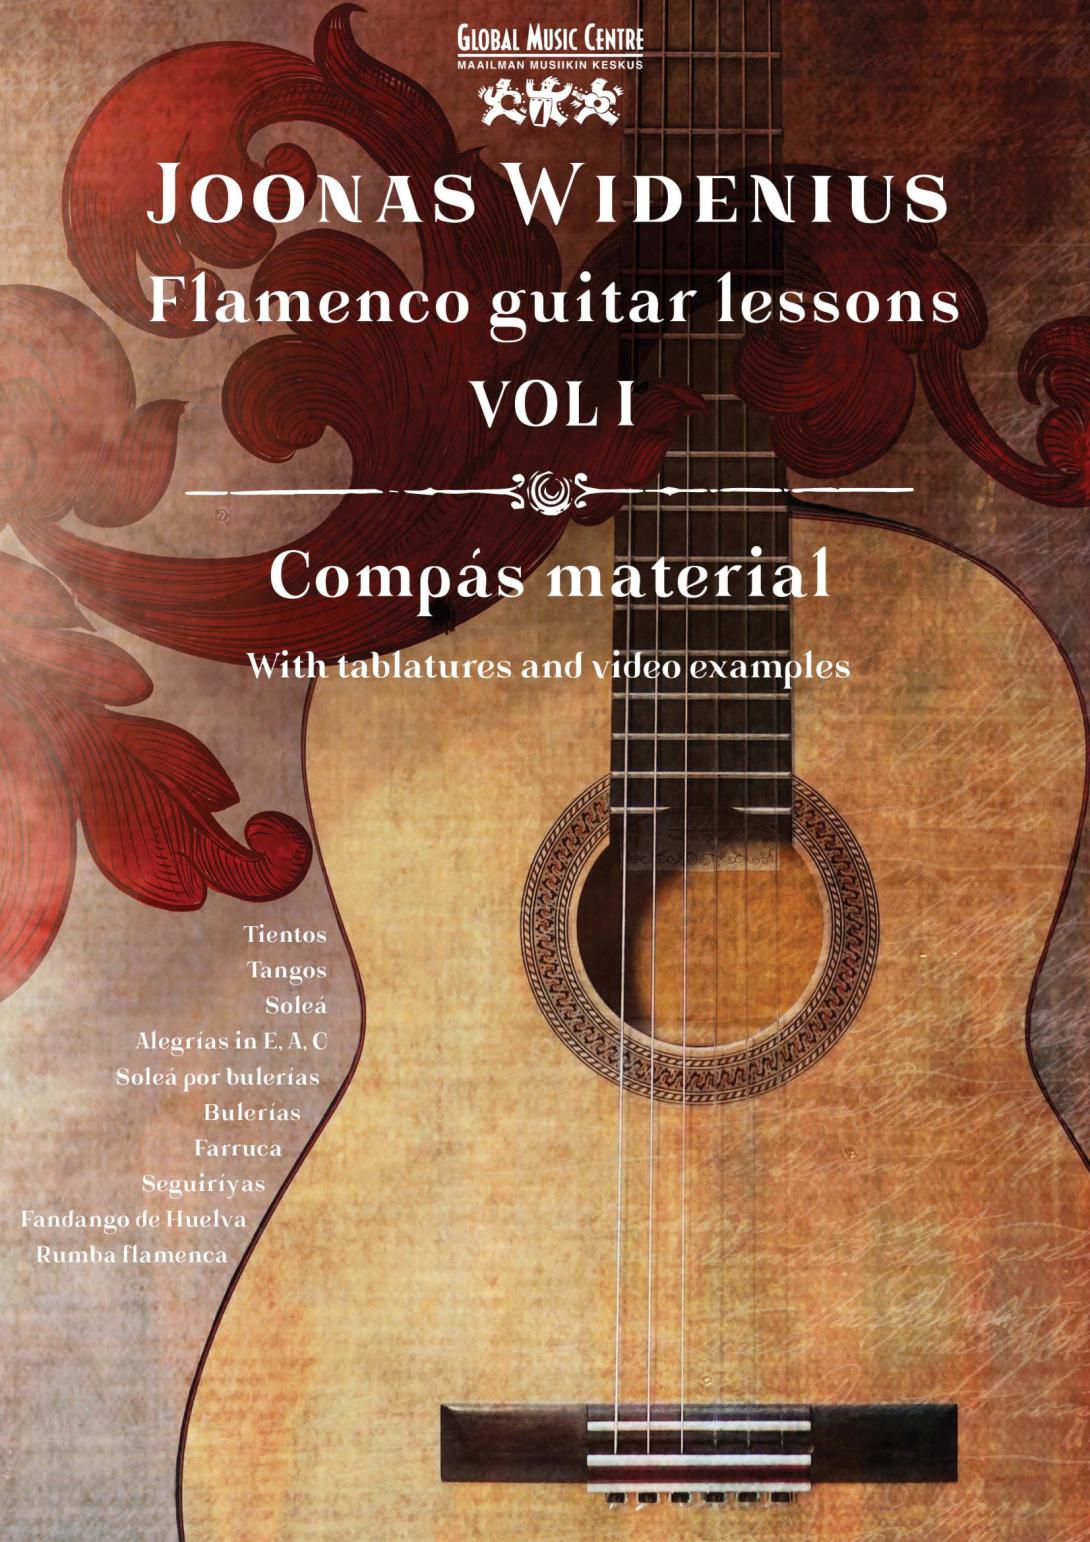 Joonas Widenius - Flamenco guitar VOL 1